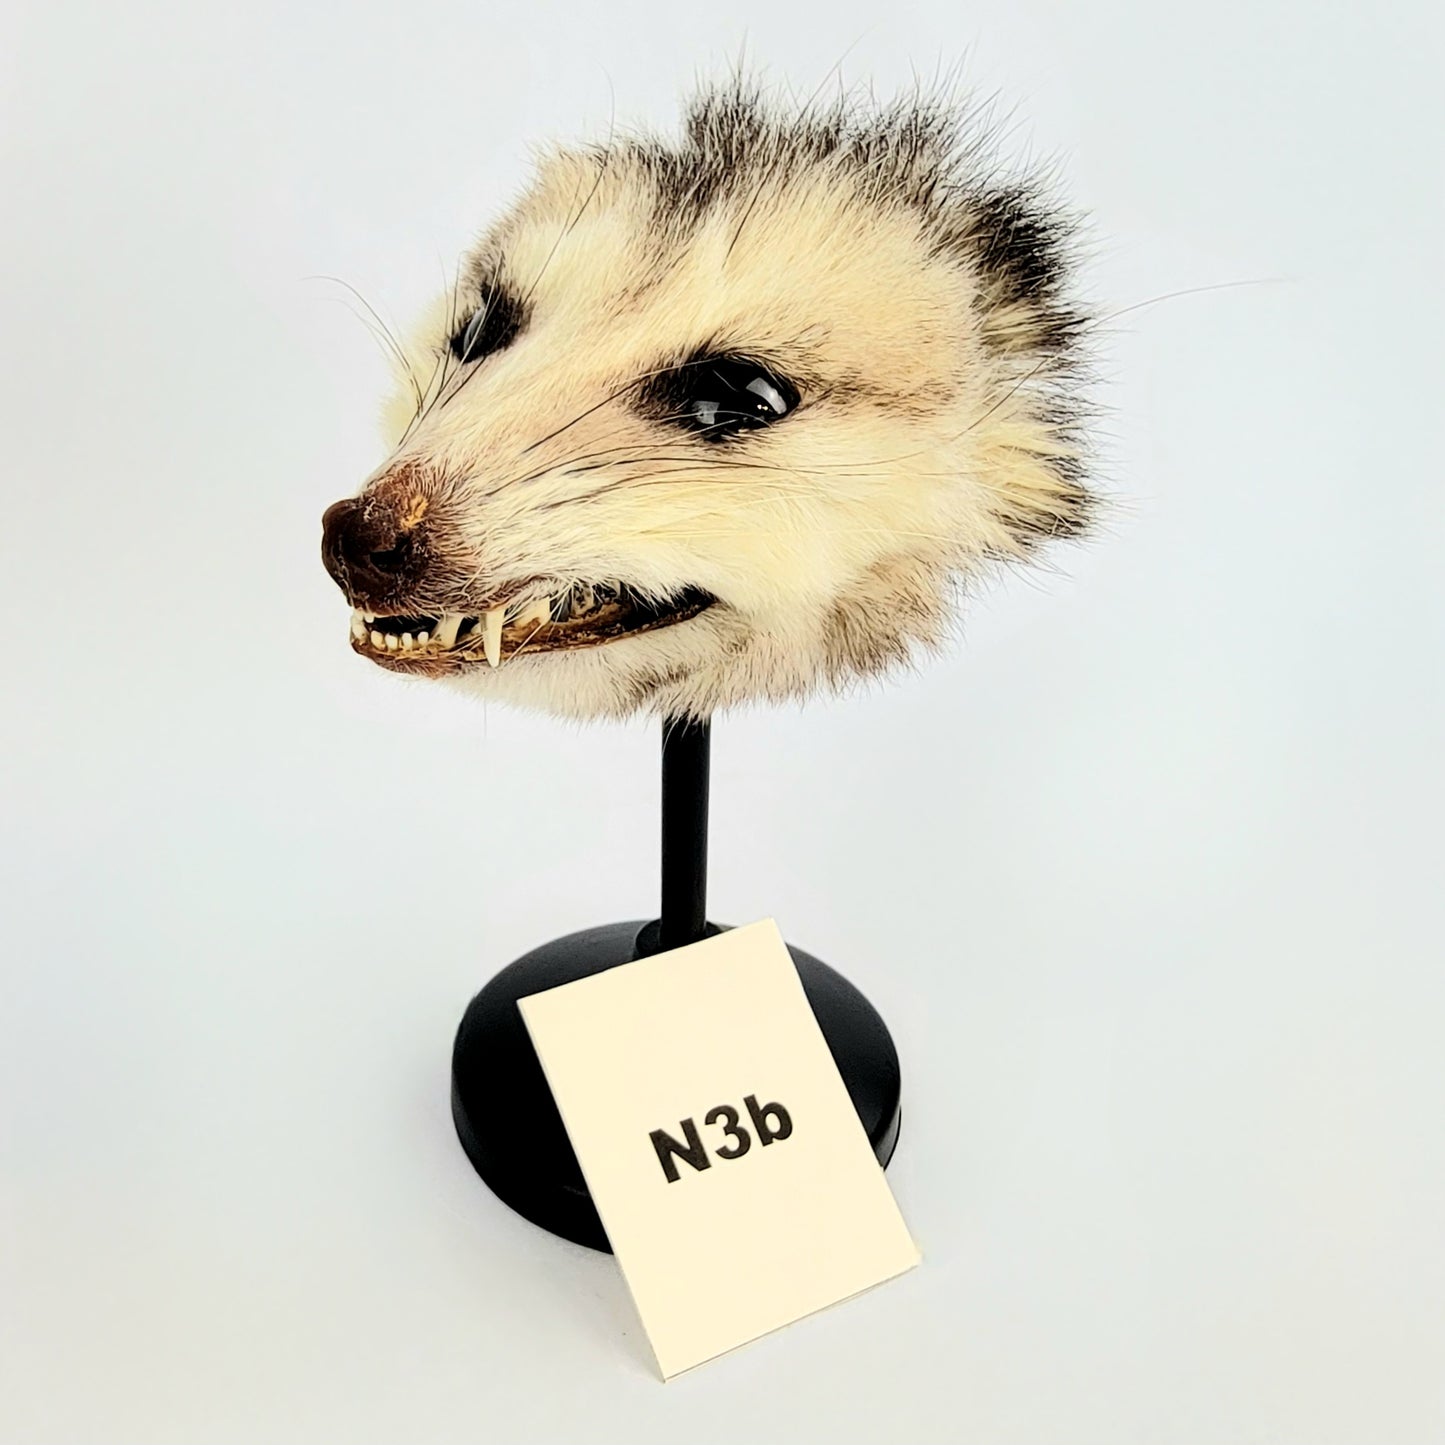 N3b Custom Anthropomorphic Opossum Doll Deposit